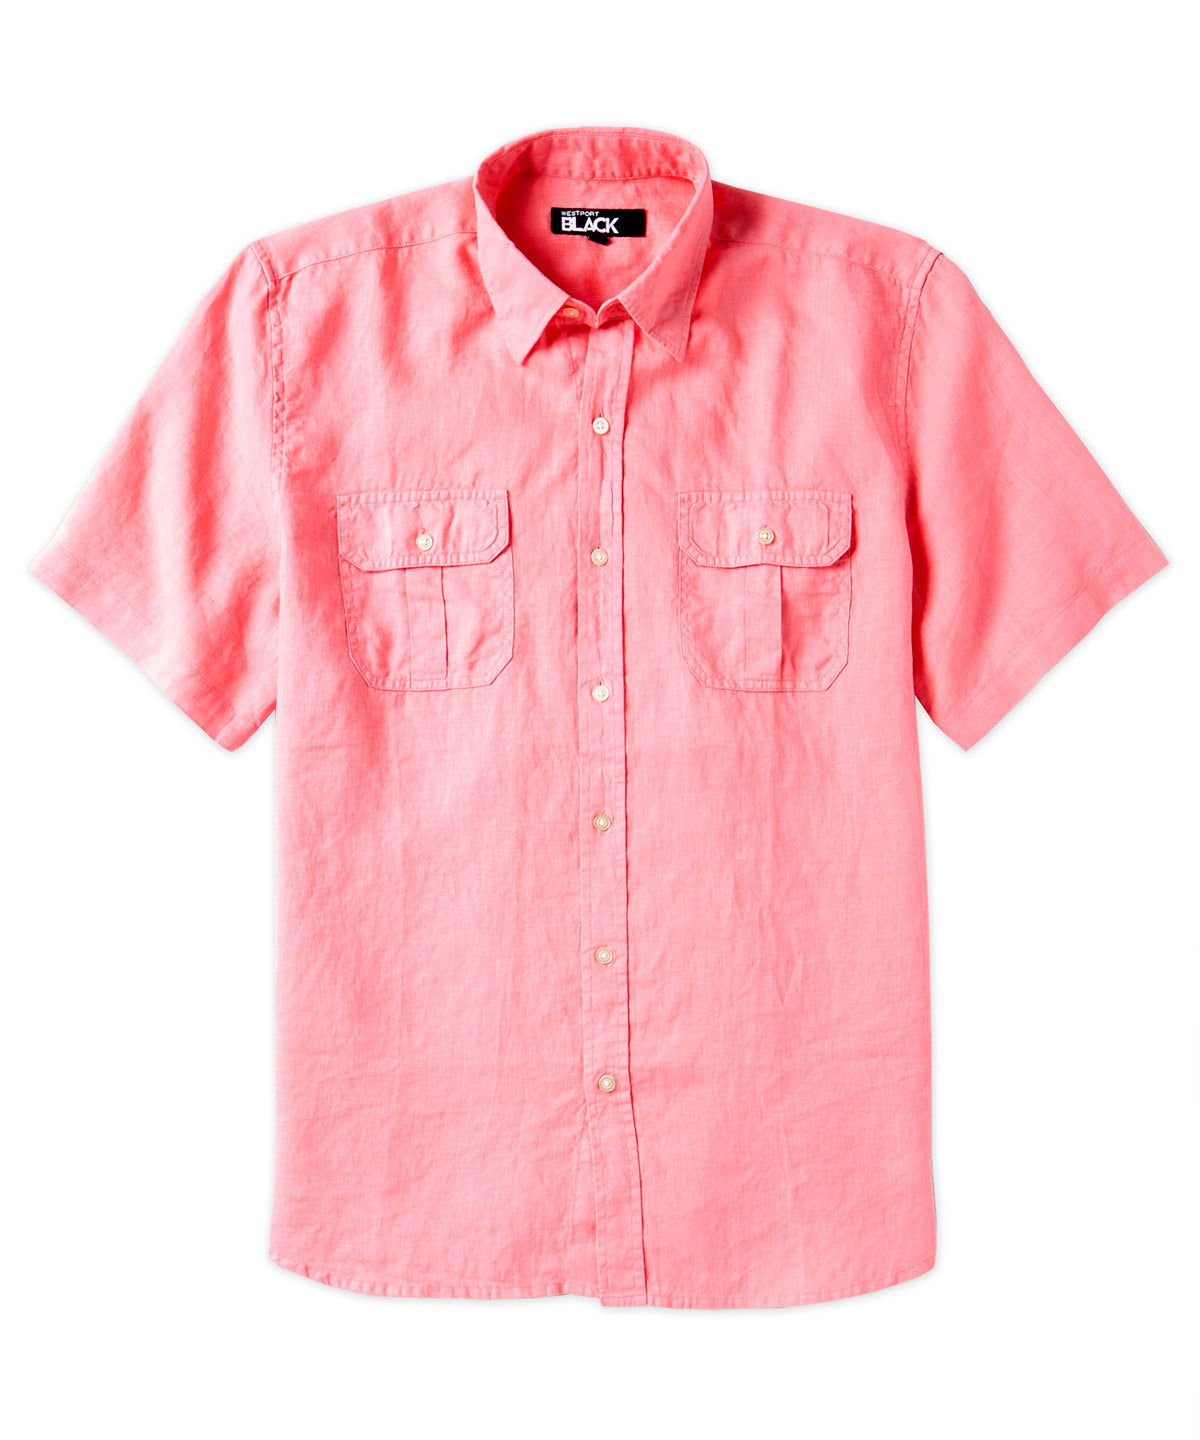 Westport Black Short Sleeve Linen Safari Shirt, Big & Tall